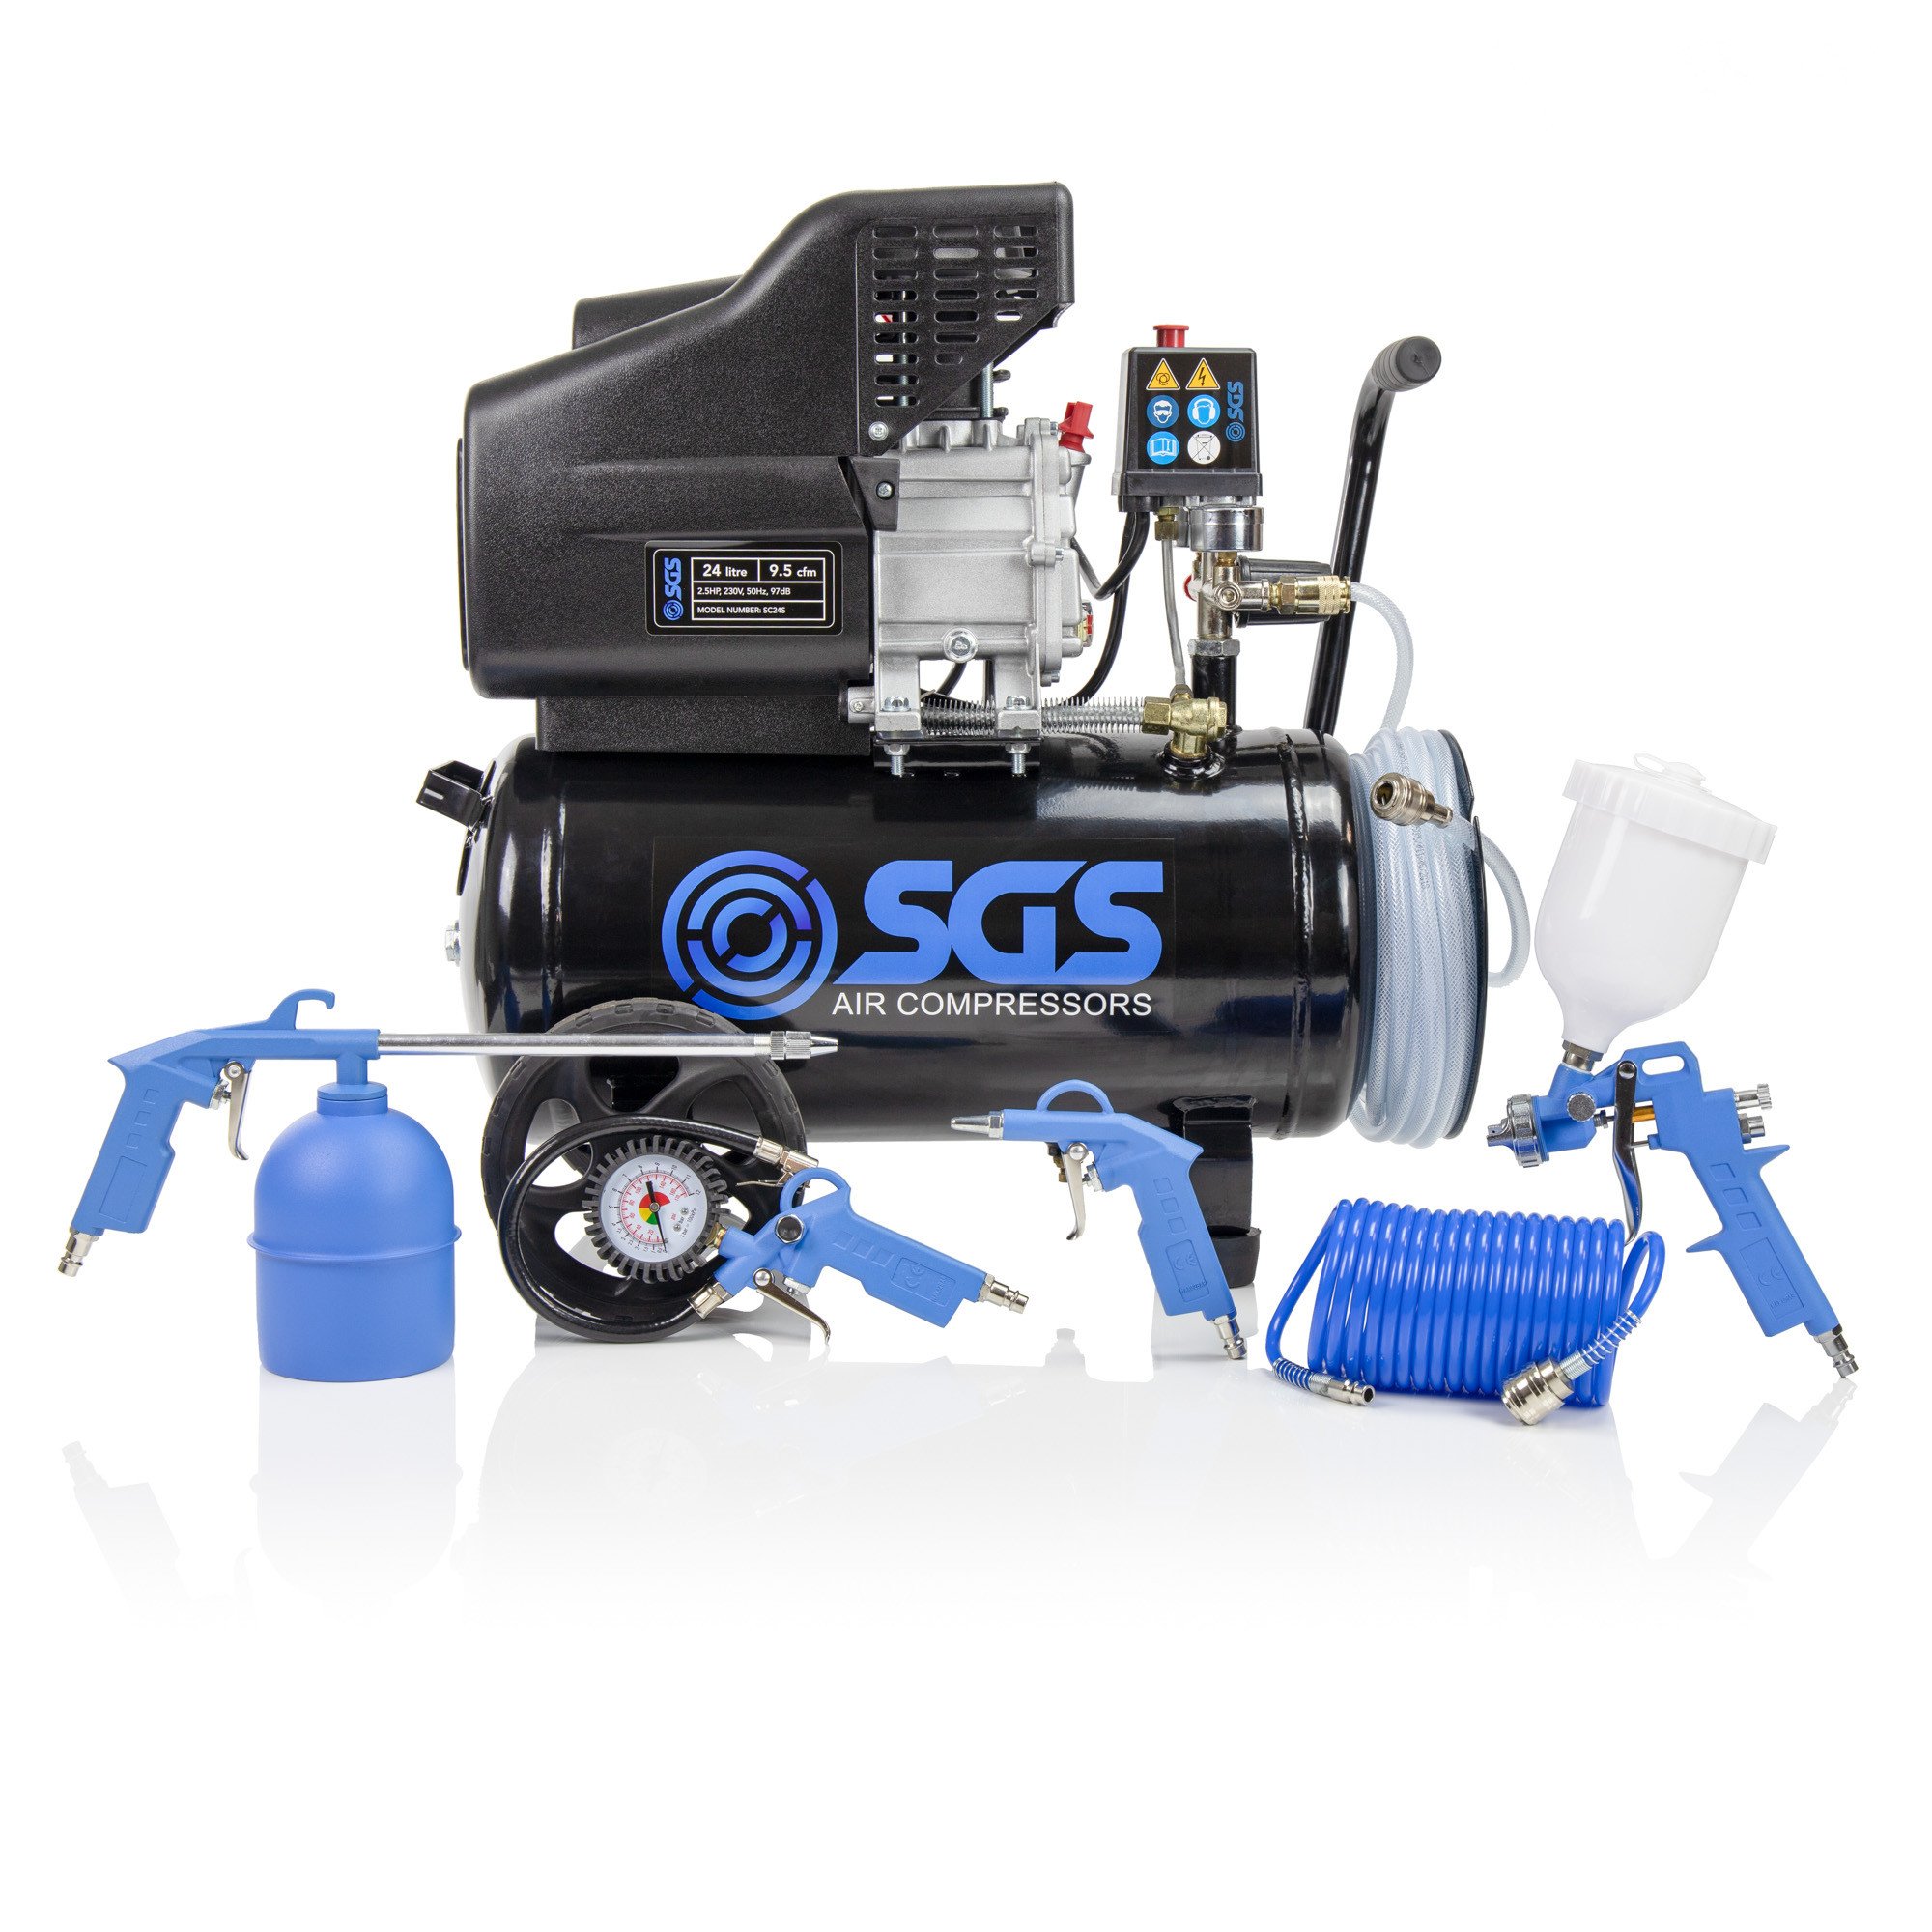 SGS 24升直接驱动空气压缩机用集成软管卷盘和5块工具包2.5 - 9.5 cfm惠普24 l